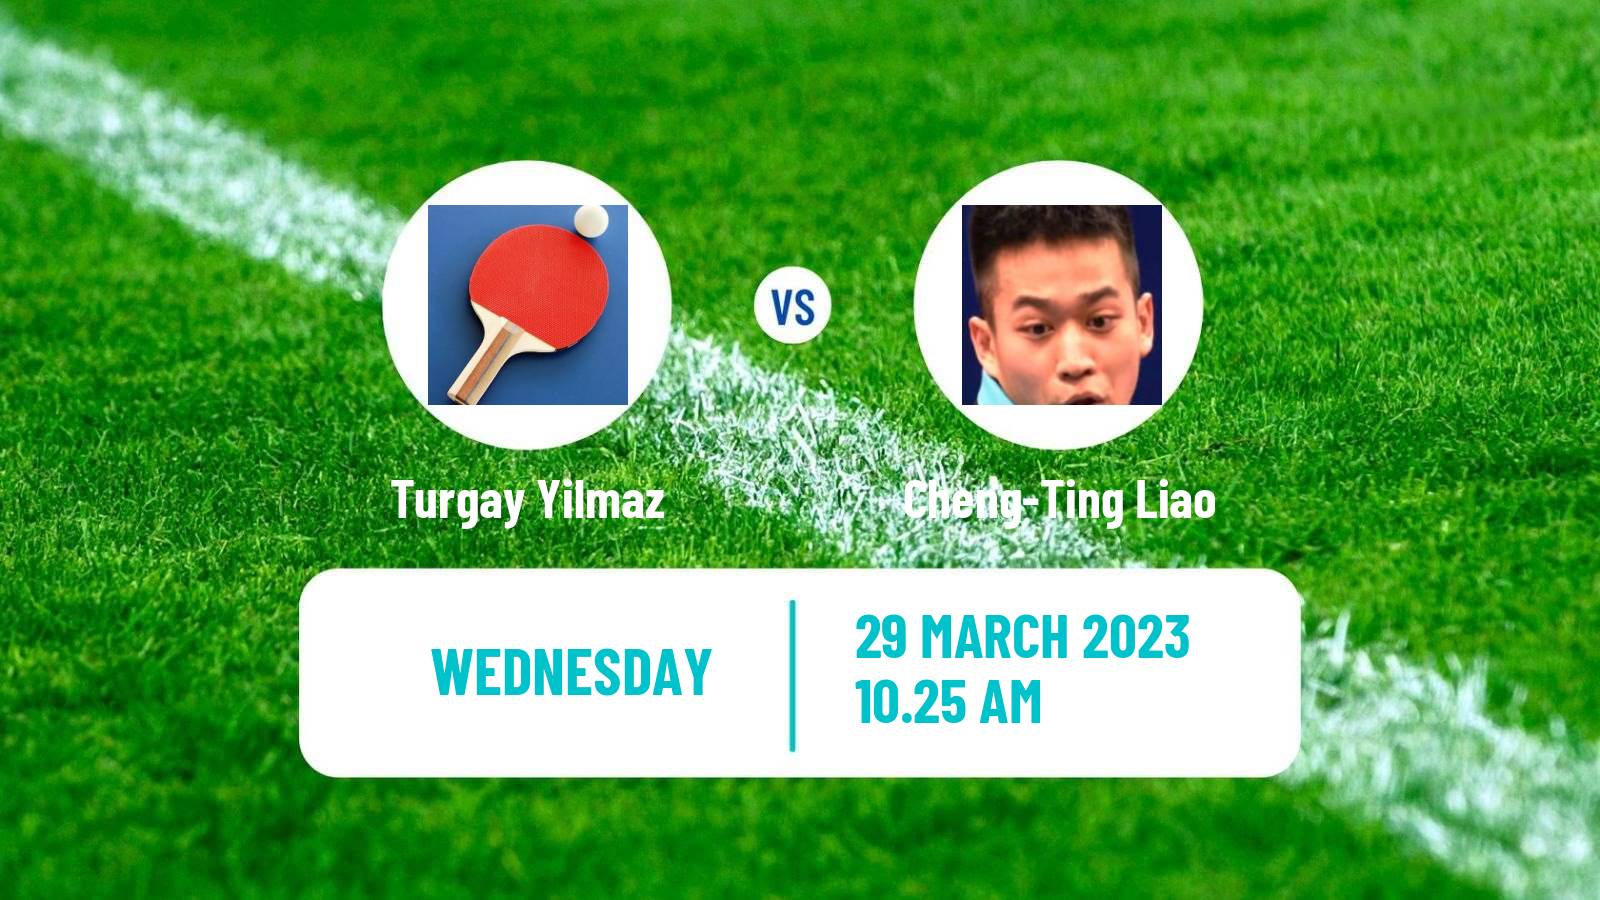 Table tennis Table Tennis Turgay Yilmaz - Cheng-Ting Liao